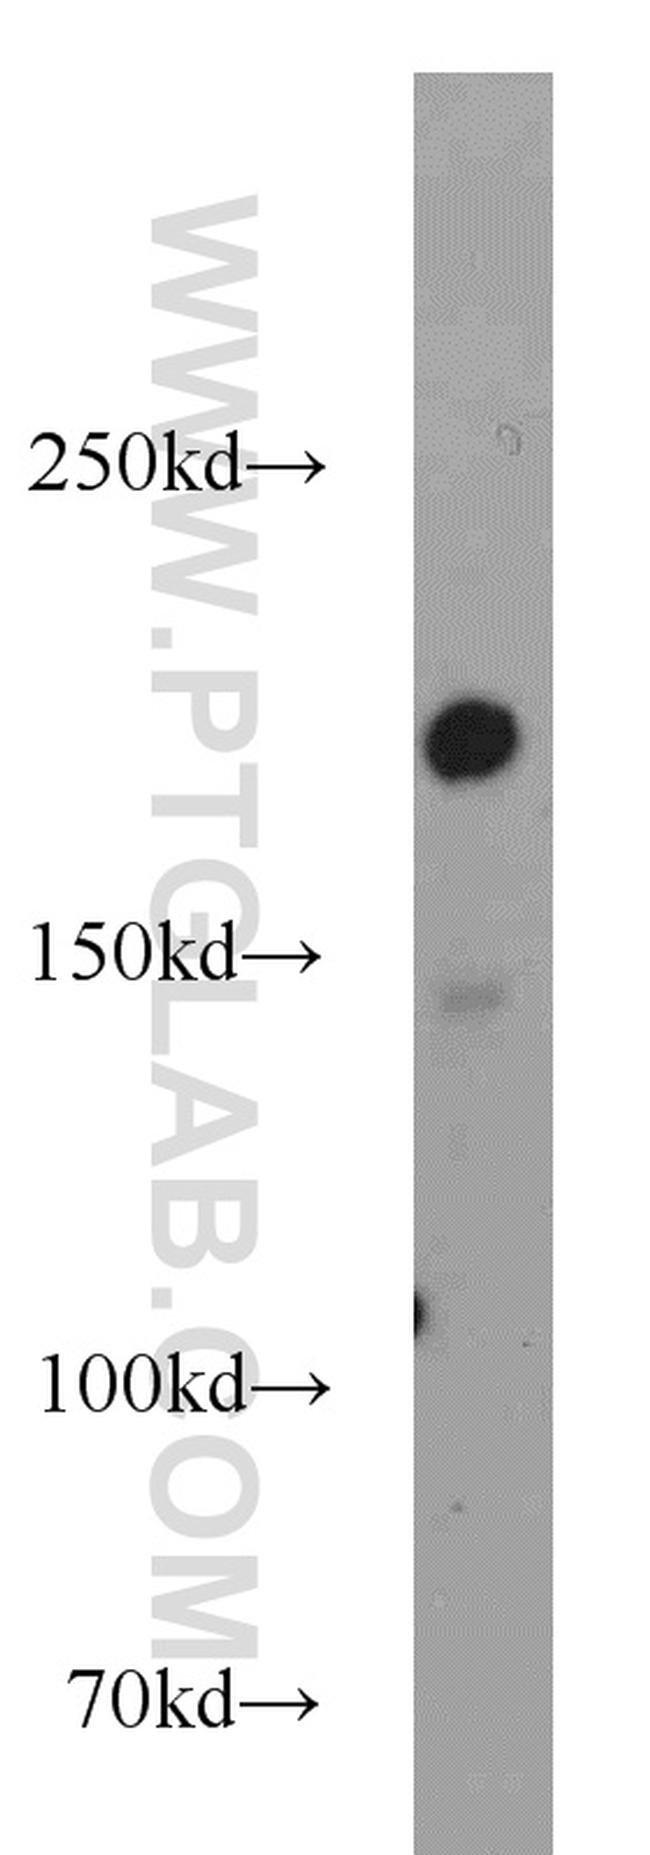 DOCK180 Antibody in Western Blot (WB)